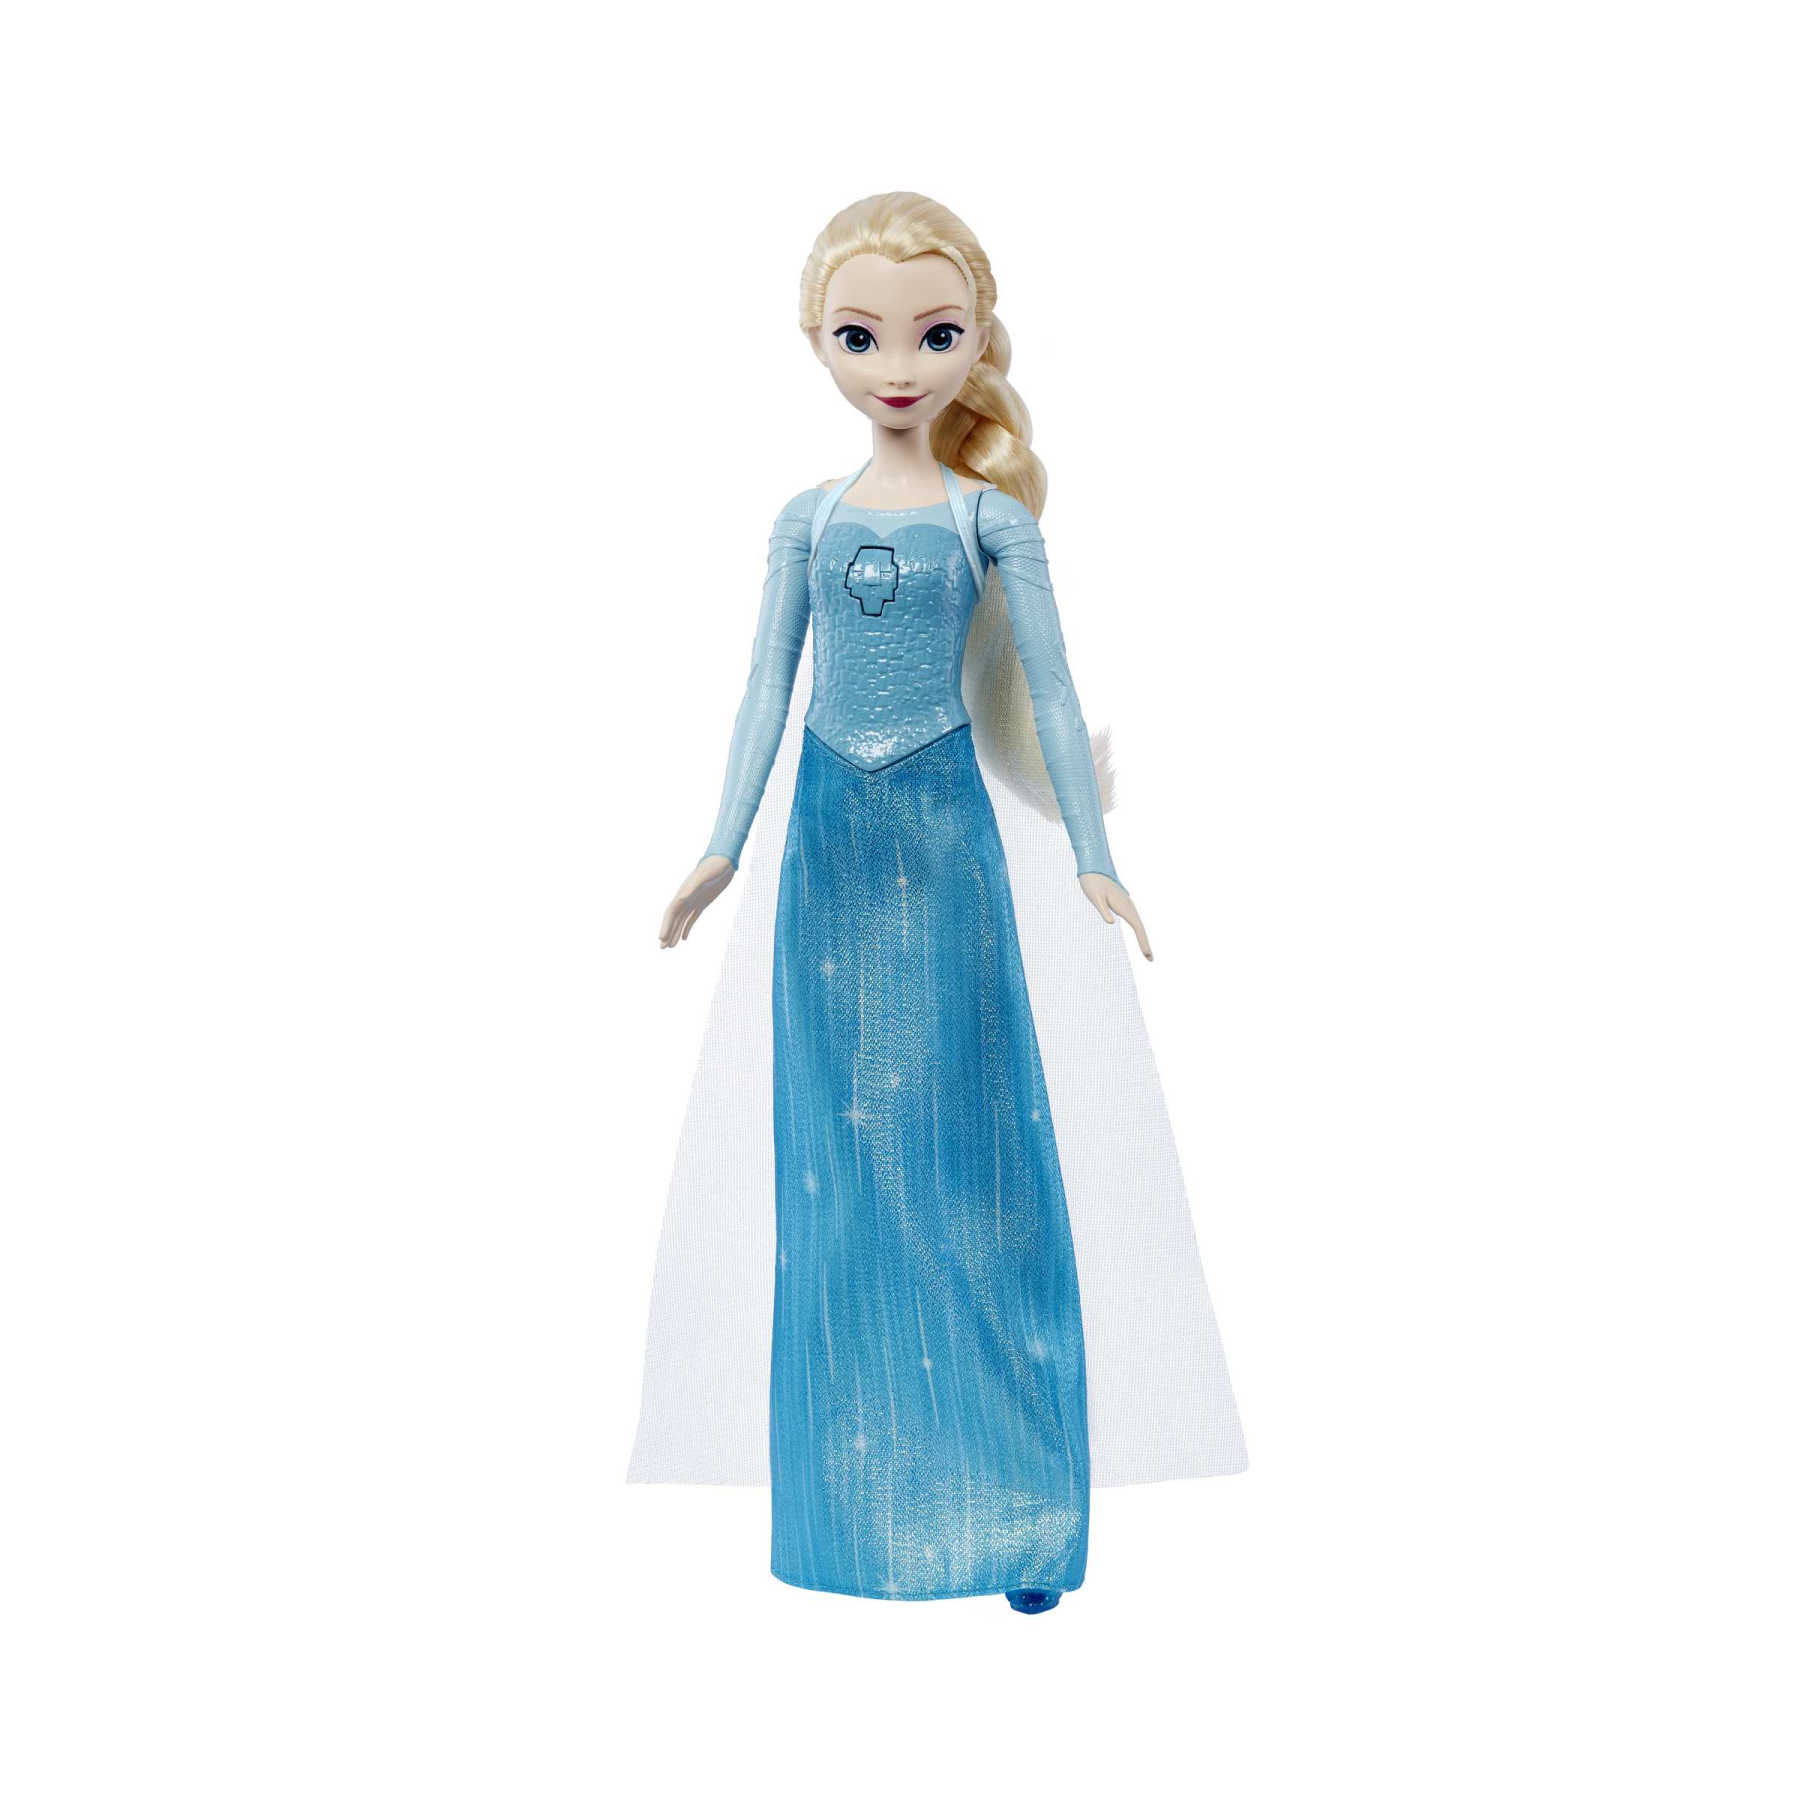 Disney frozen - elsa all'alba sorgerò, bambola con look esclusivo, canta “all'alba sorgerò” dal film disney frozen, giocattolo per bambini, 3+ anni, hmg33 - Frozen